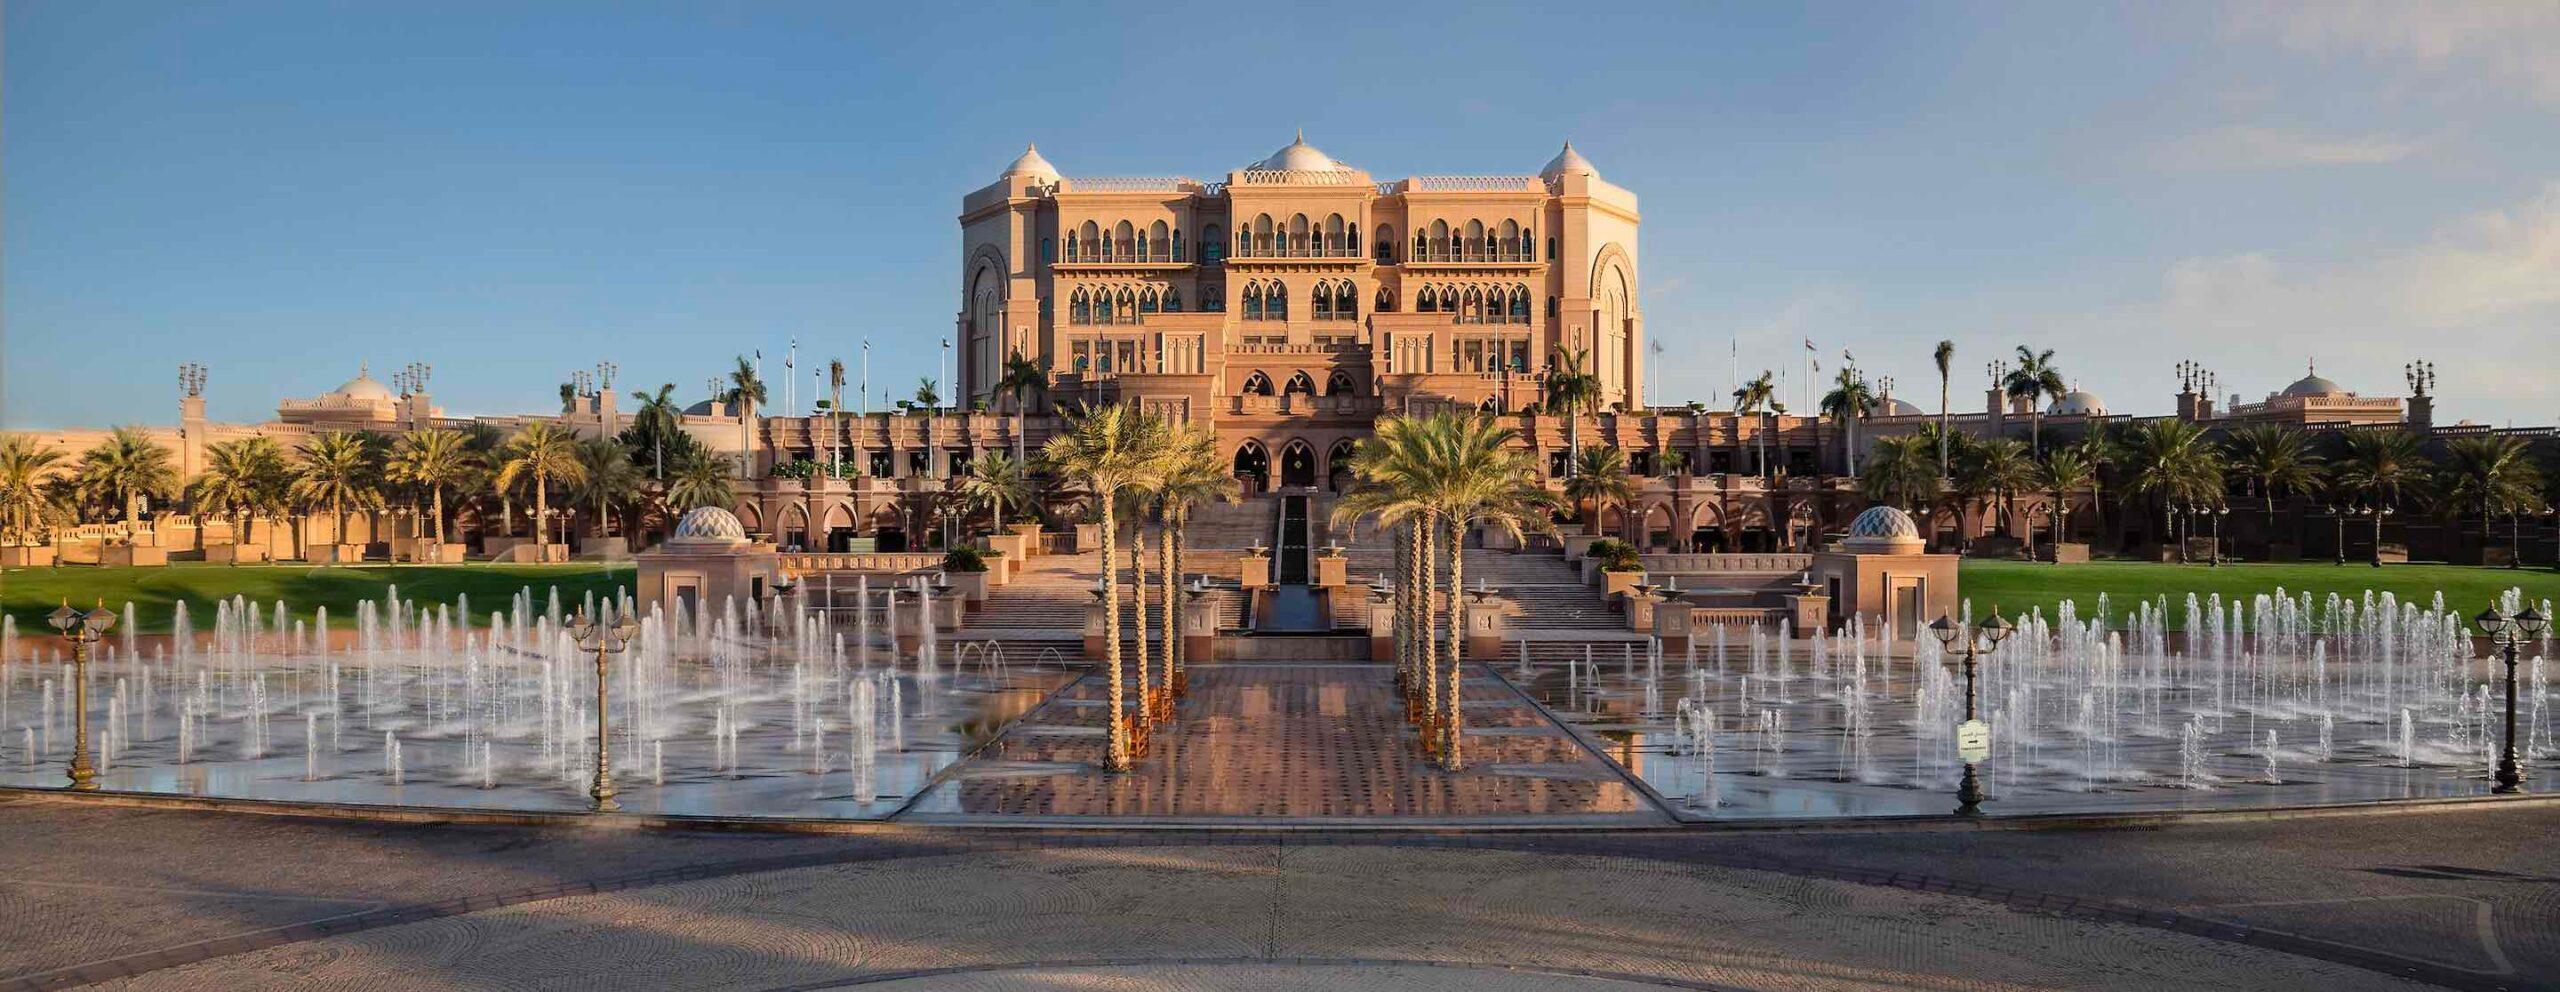 Staycation Spotlight: Emirates Palace Mandarin Oriental, Abu Dhabi